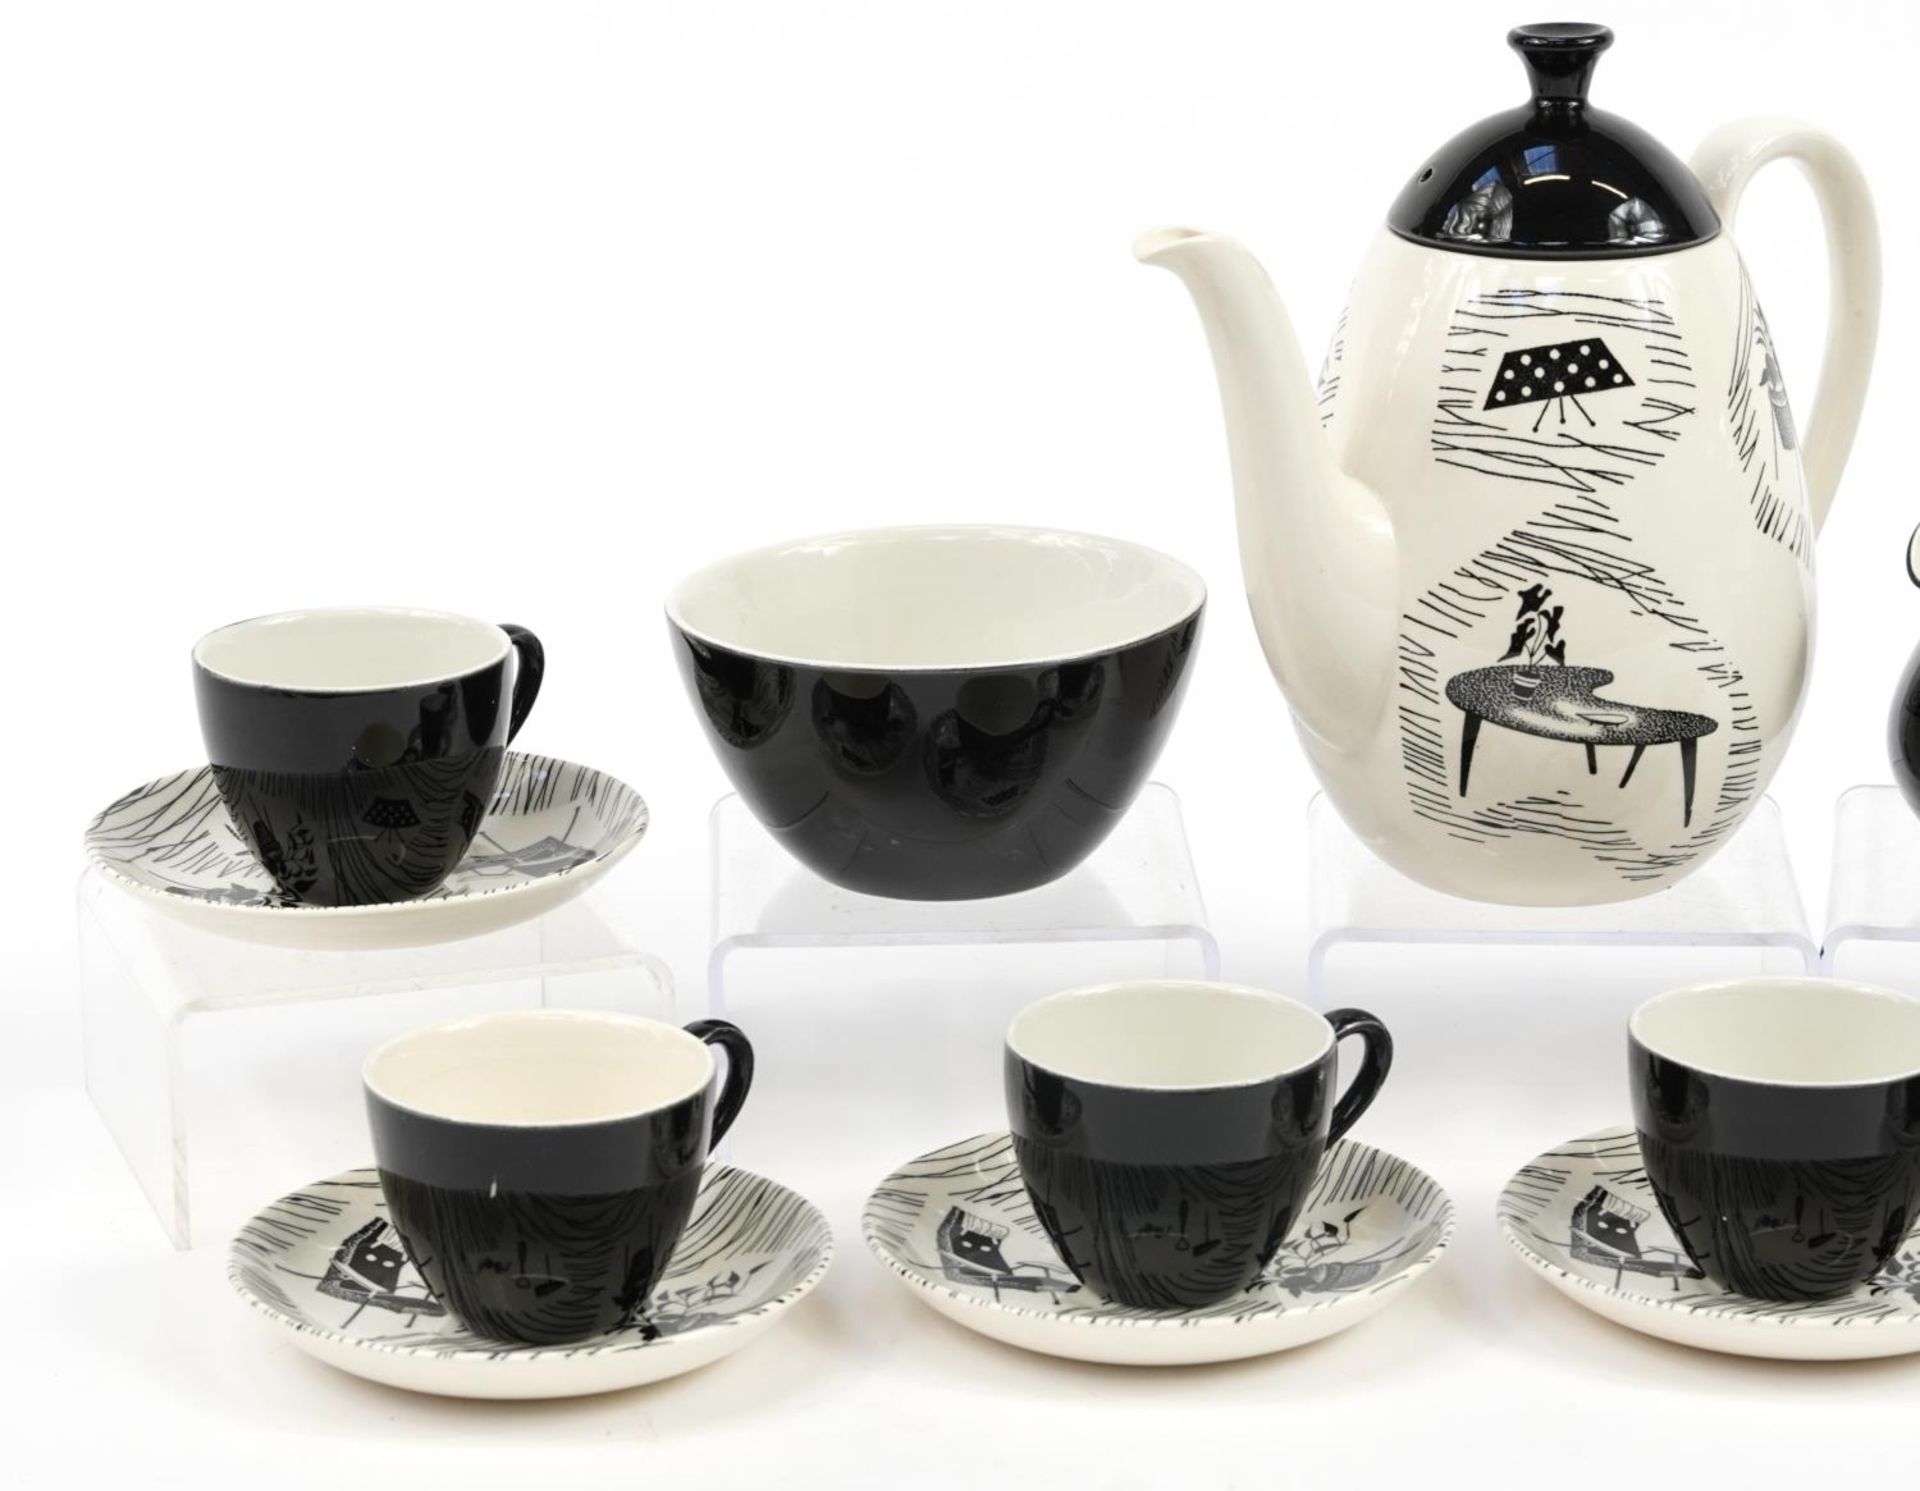 Ridgeways Homemaker six place coffee set comprising coffee pot, milk jug, sugar bowl and six cups - Image 2 of 4